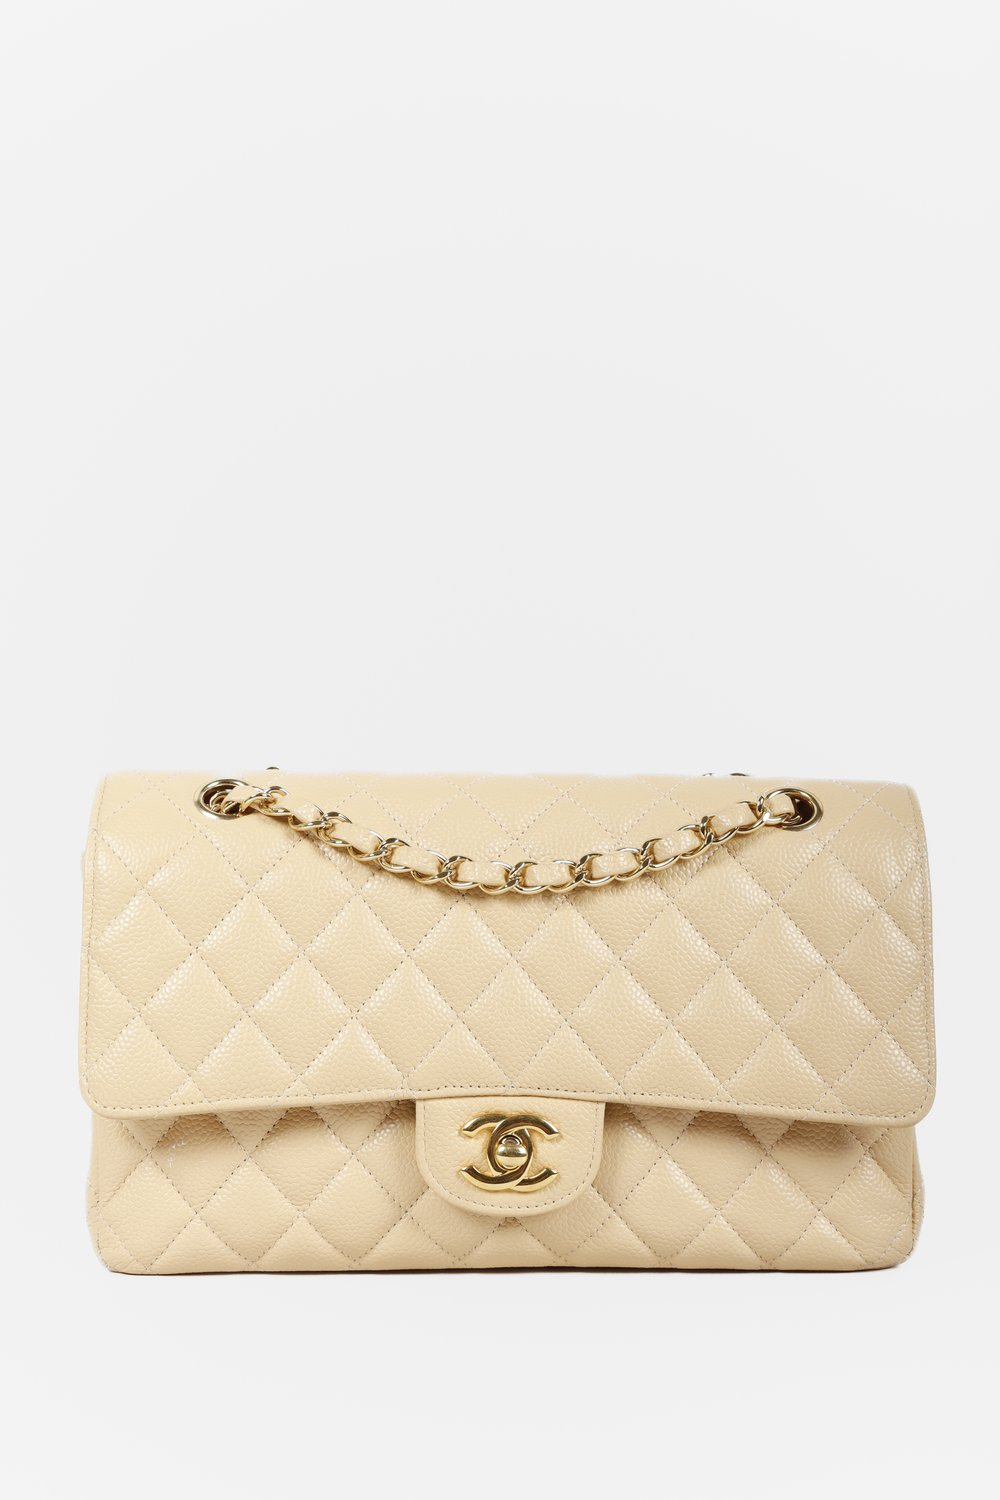 Chanel 2014 Beige Caviar Medium Double Flap Bag GHW — BLOGGER ARMOIRE